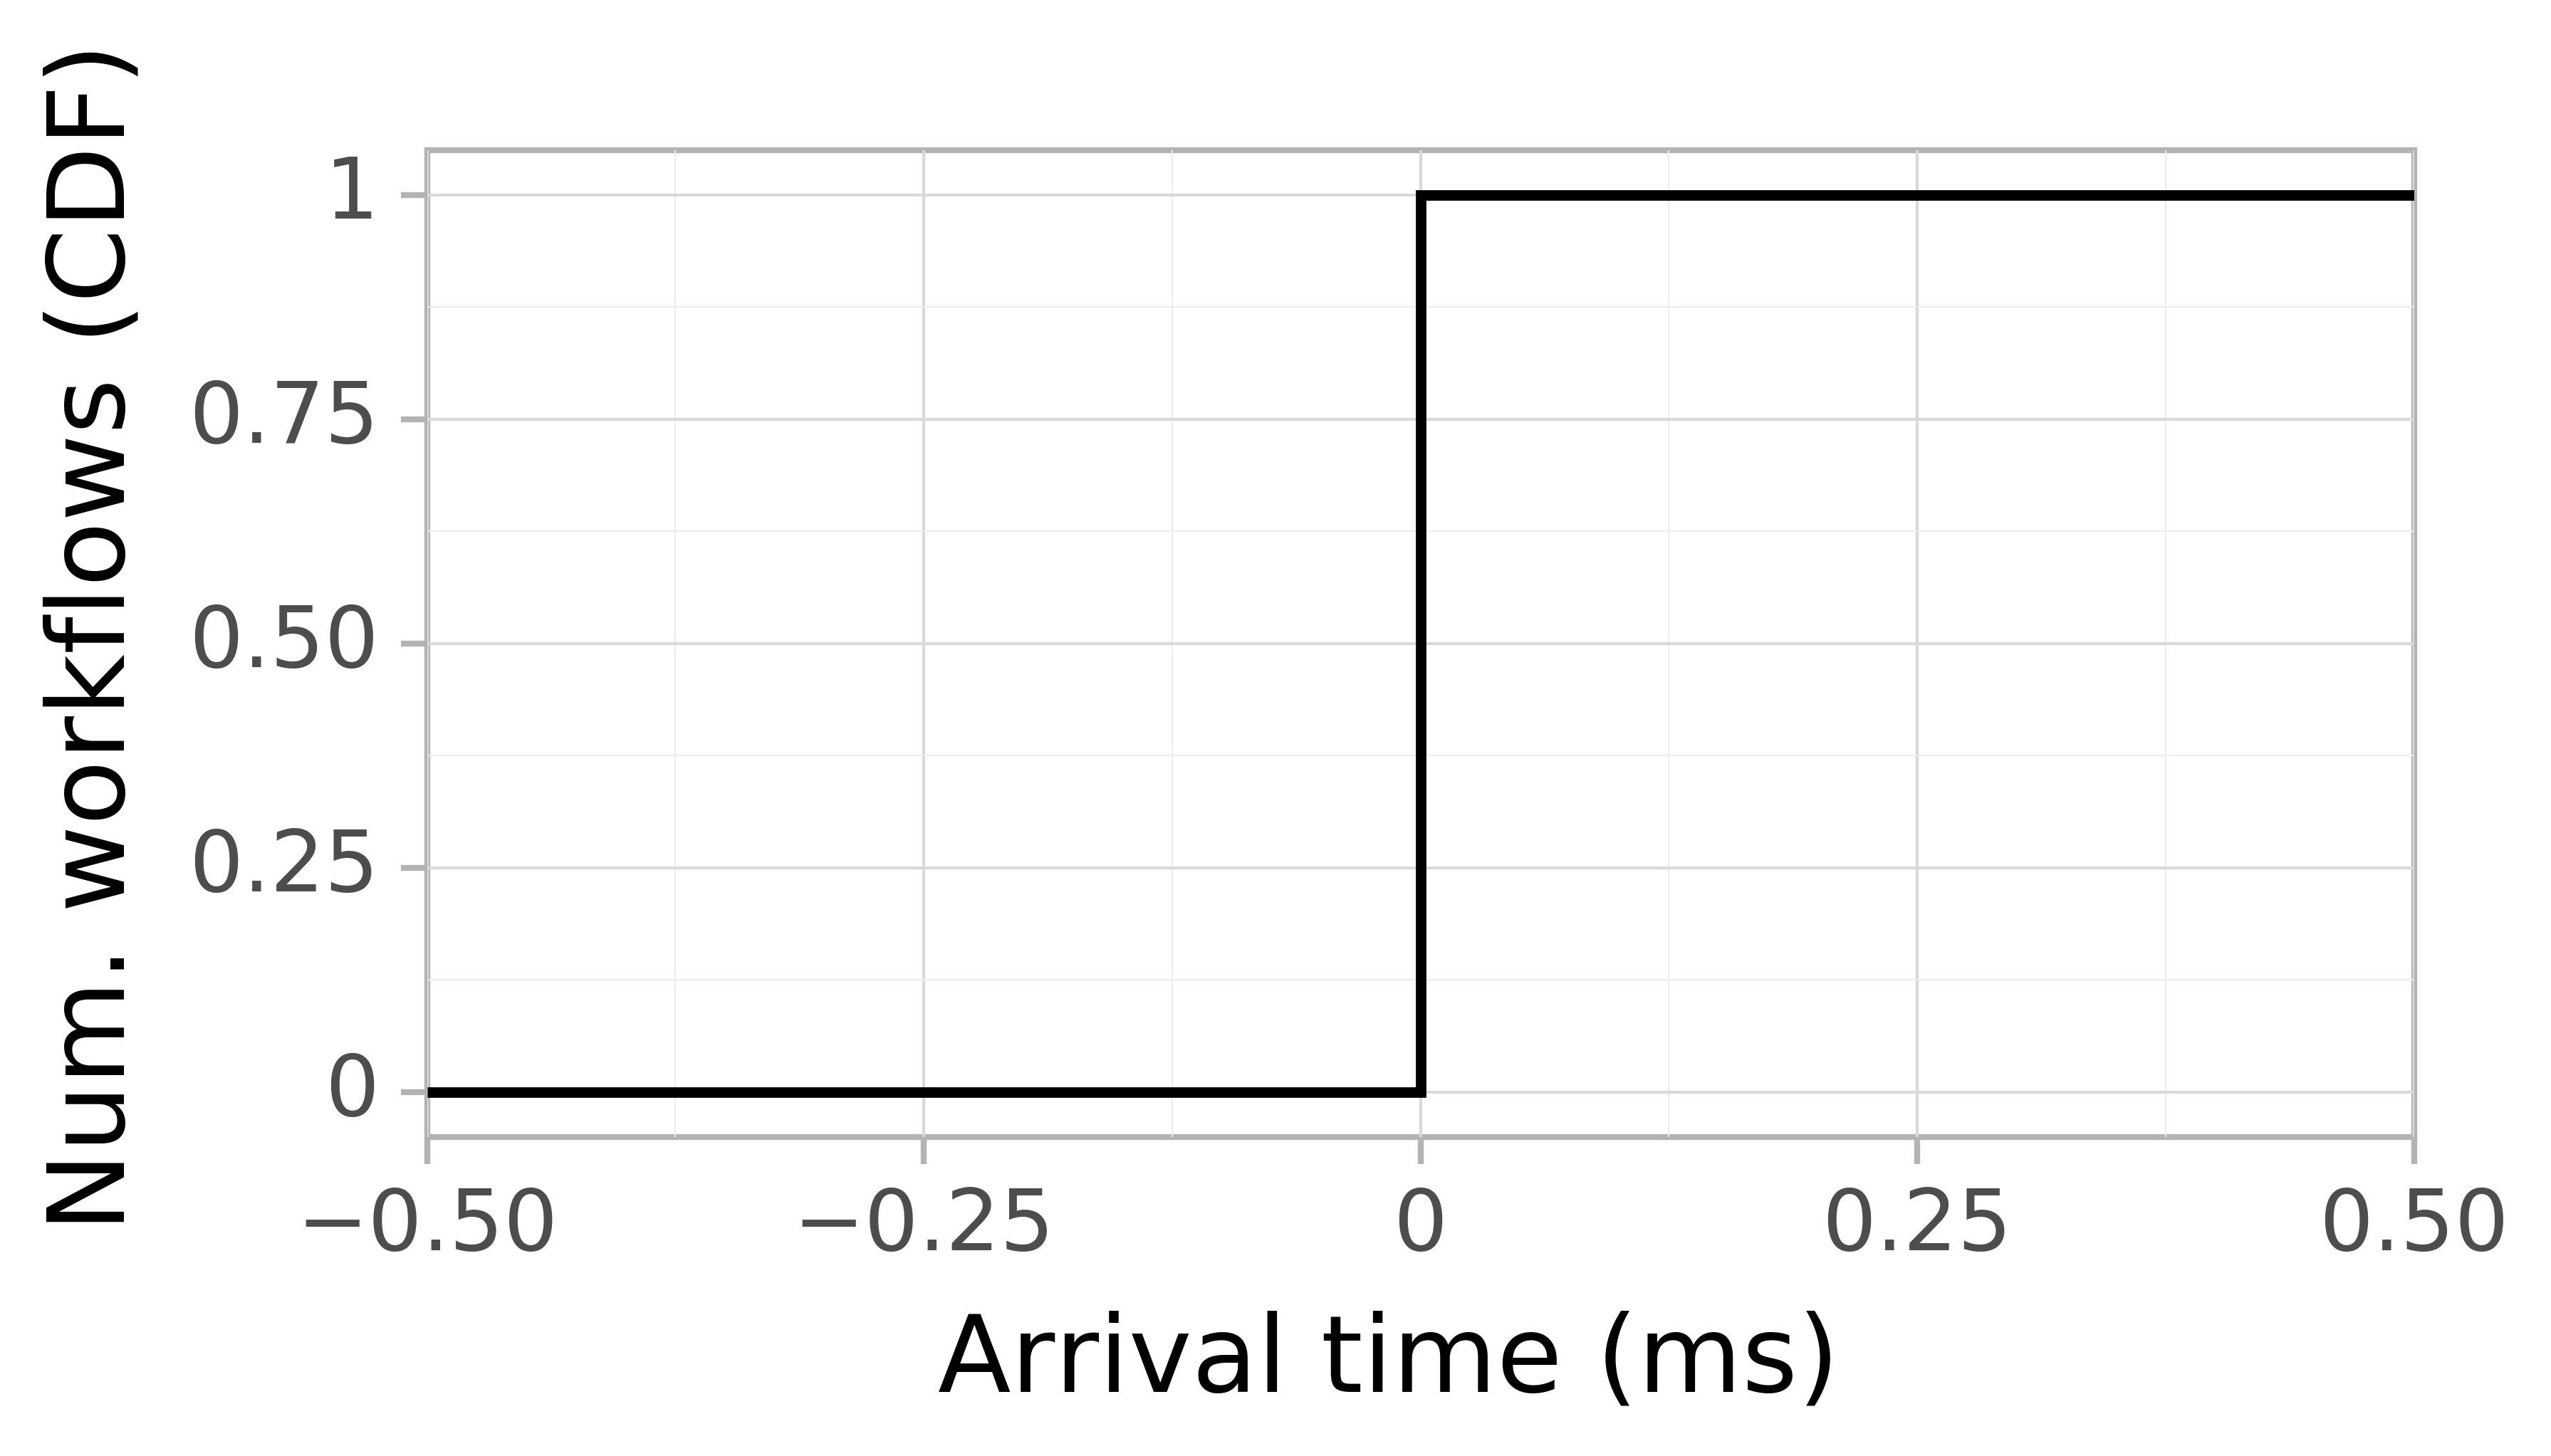 Job arrival CDF graph for the spec_trace-1 trace.